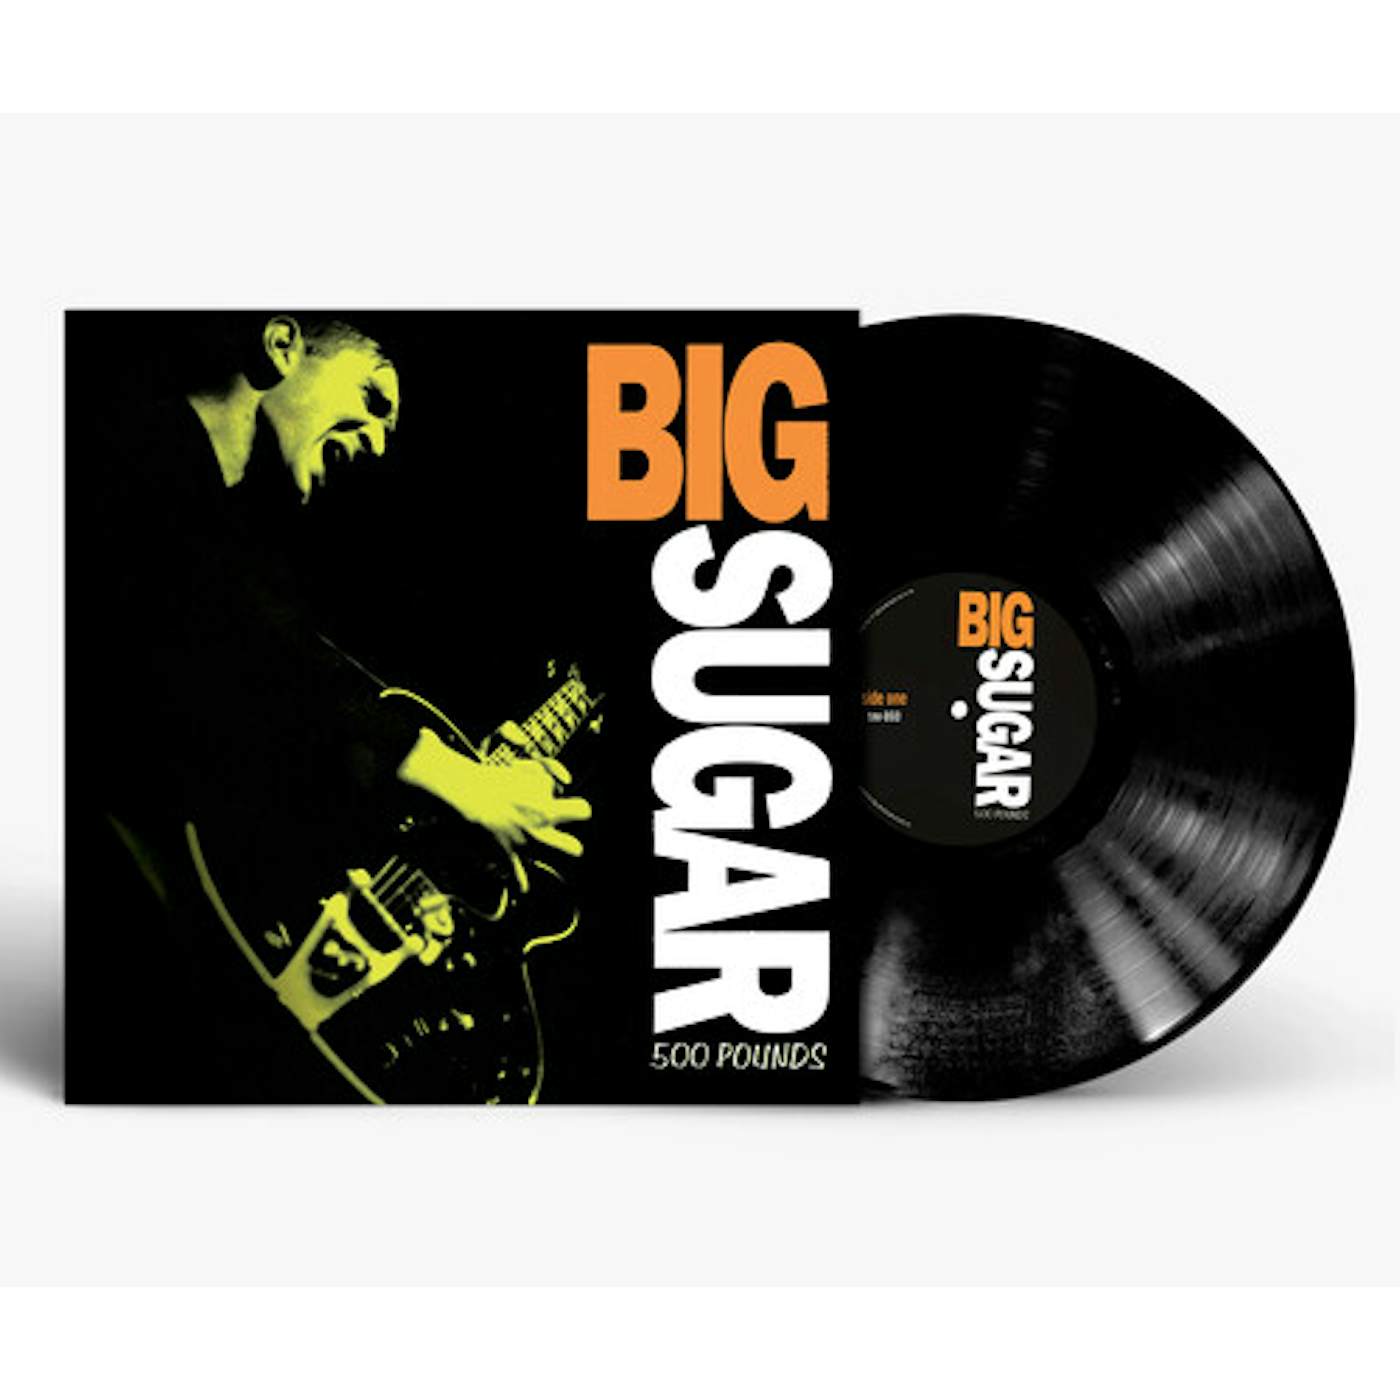 Big Sugar 500 POUNDS Vinyl Record